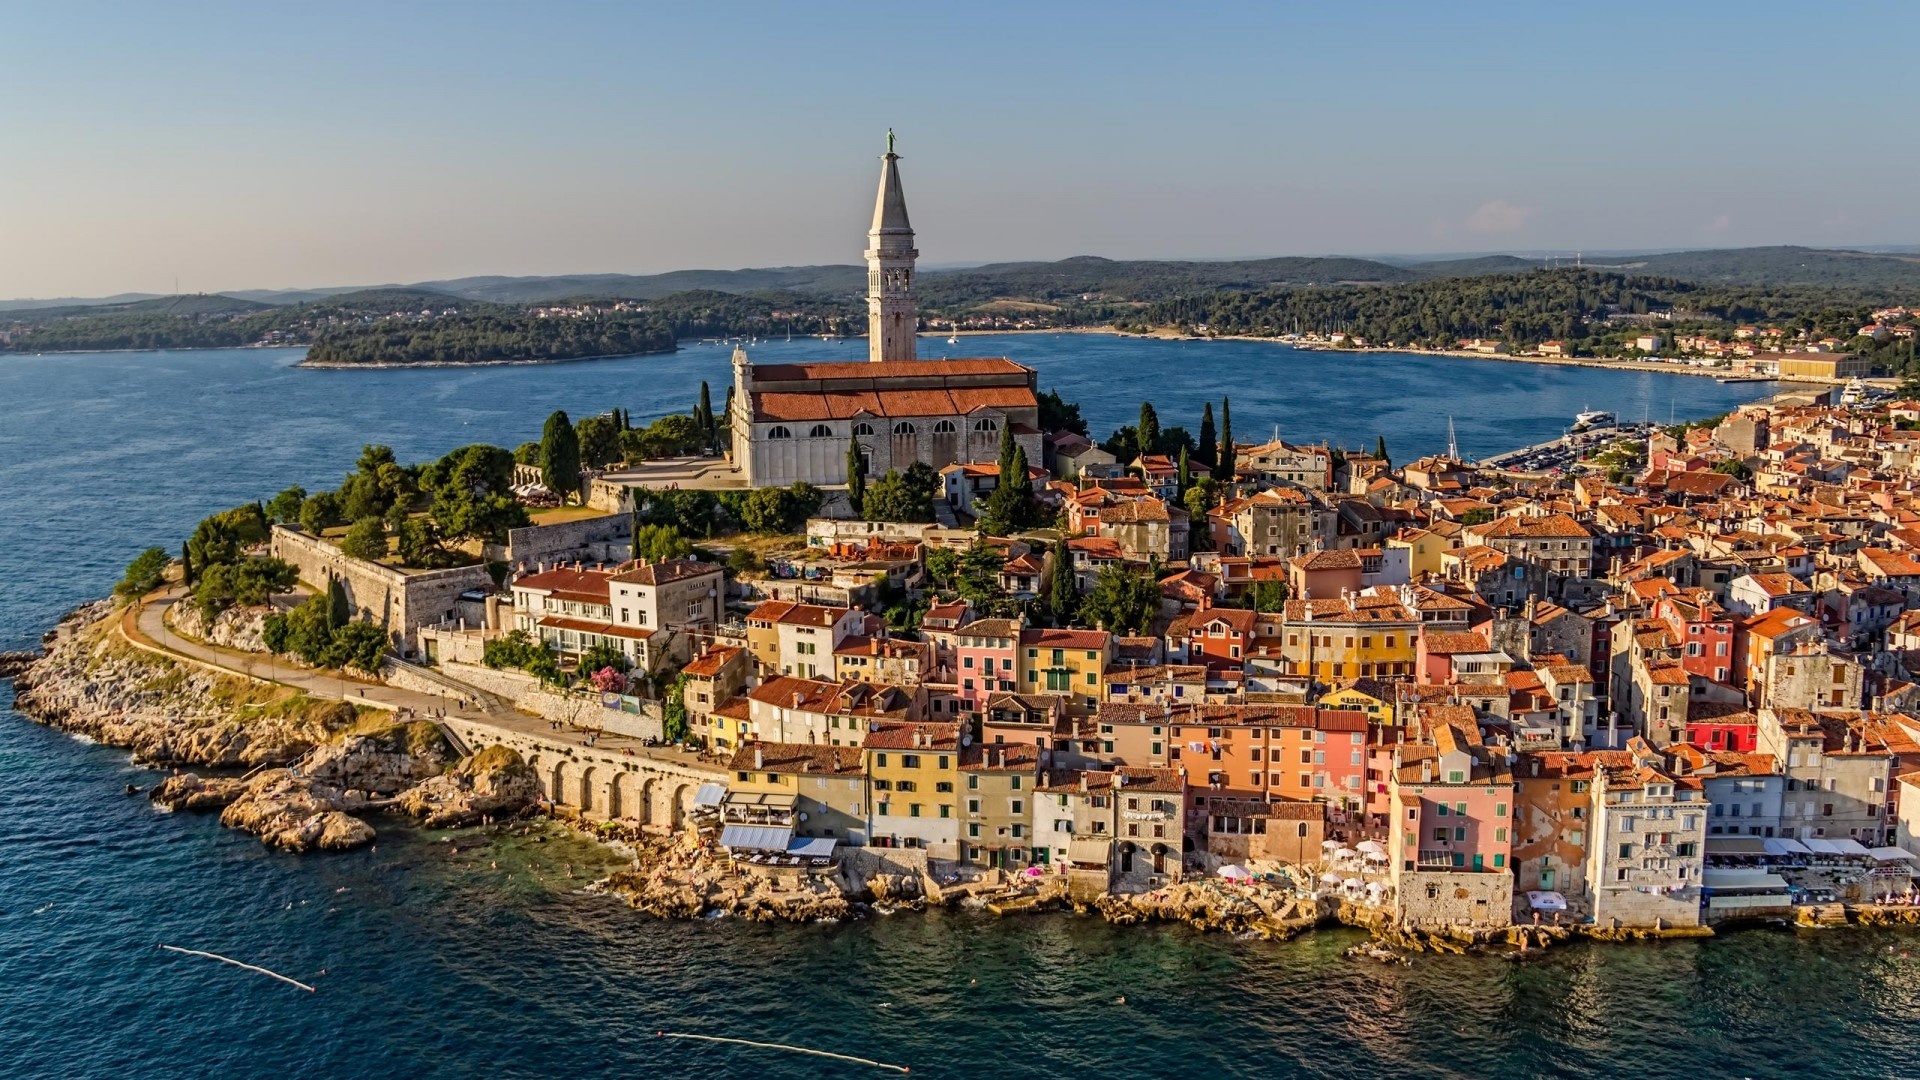 Croatia: Rovinj, A Croatian fishing port on the west coast of the Istrian peninsula. 1920x1080 Full HD Wallpaper.